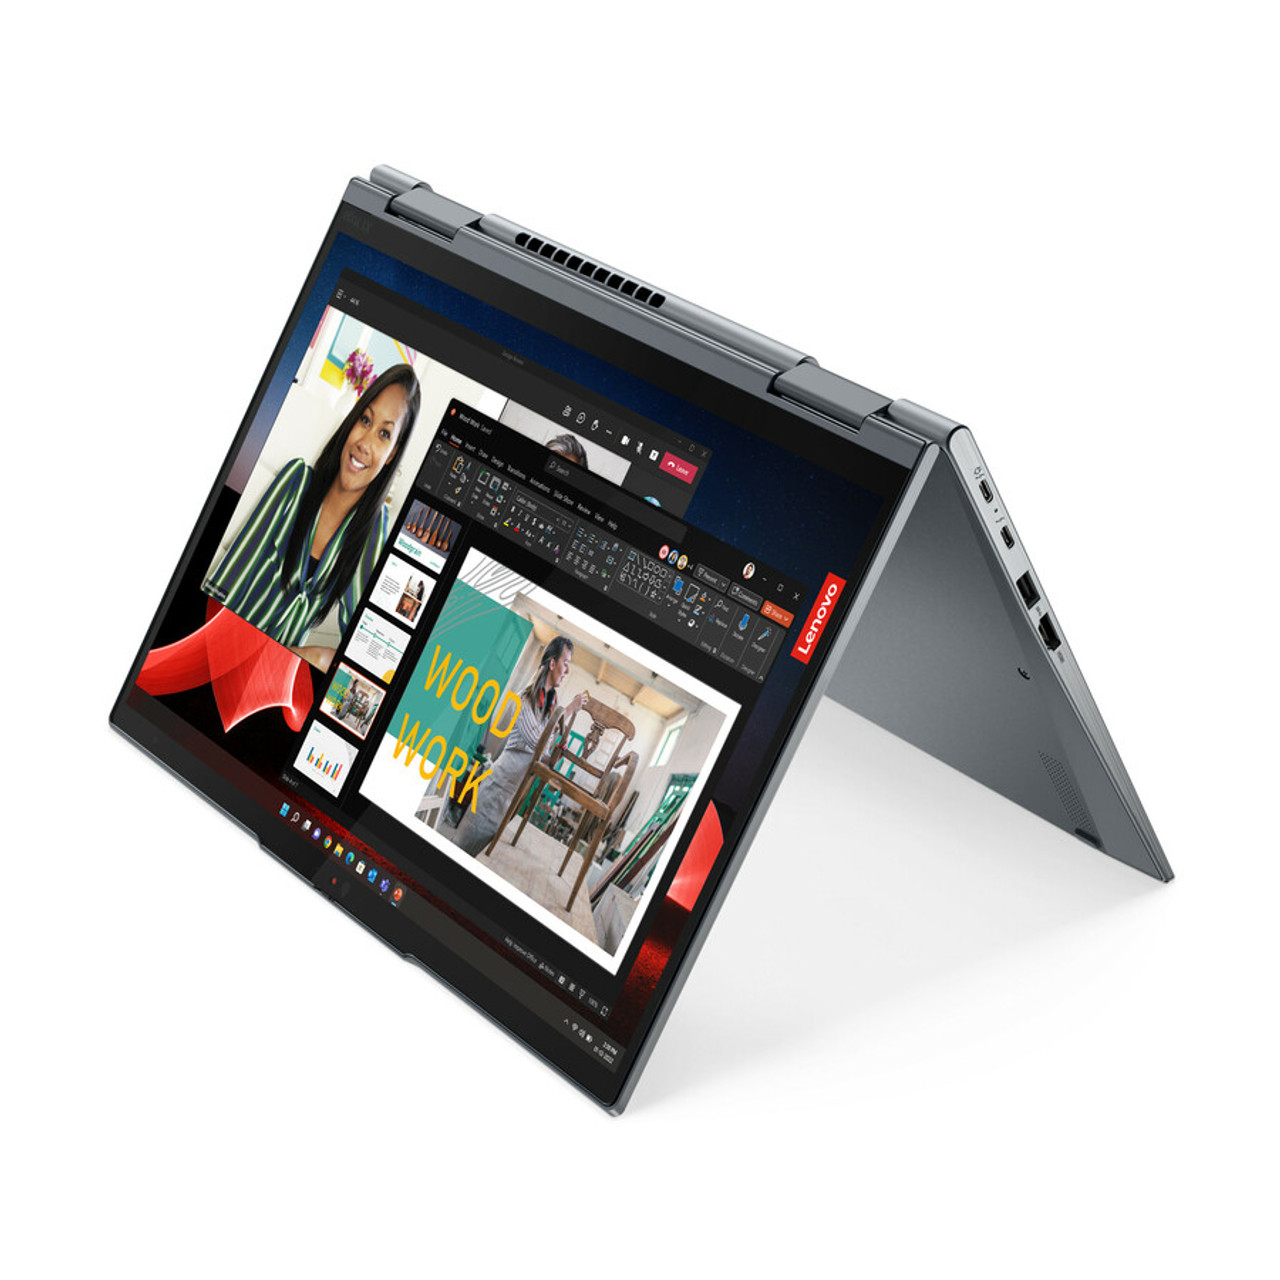 Lenovo ThinkPad X1 Yoga GEN Core i7